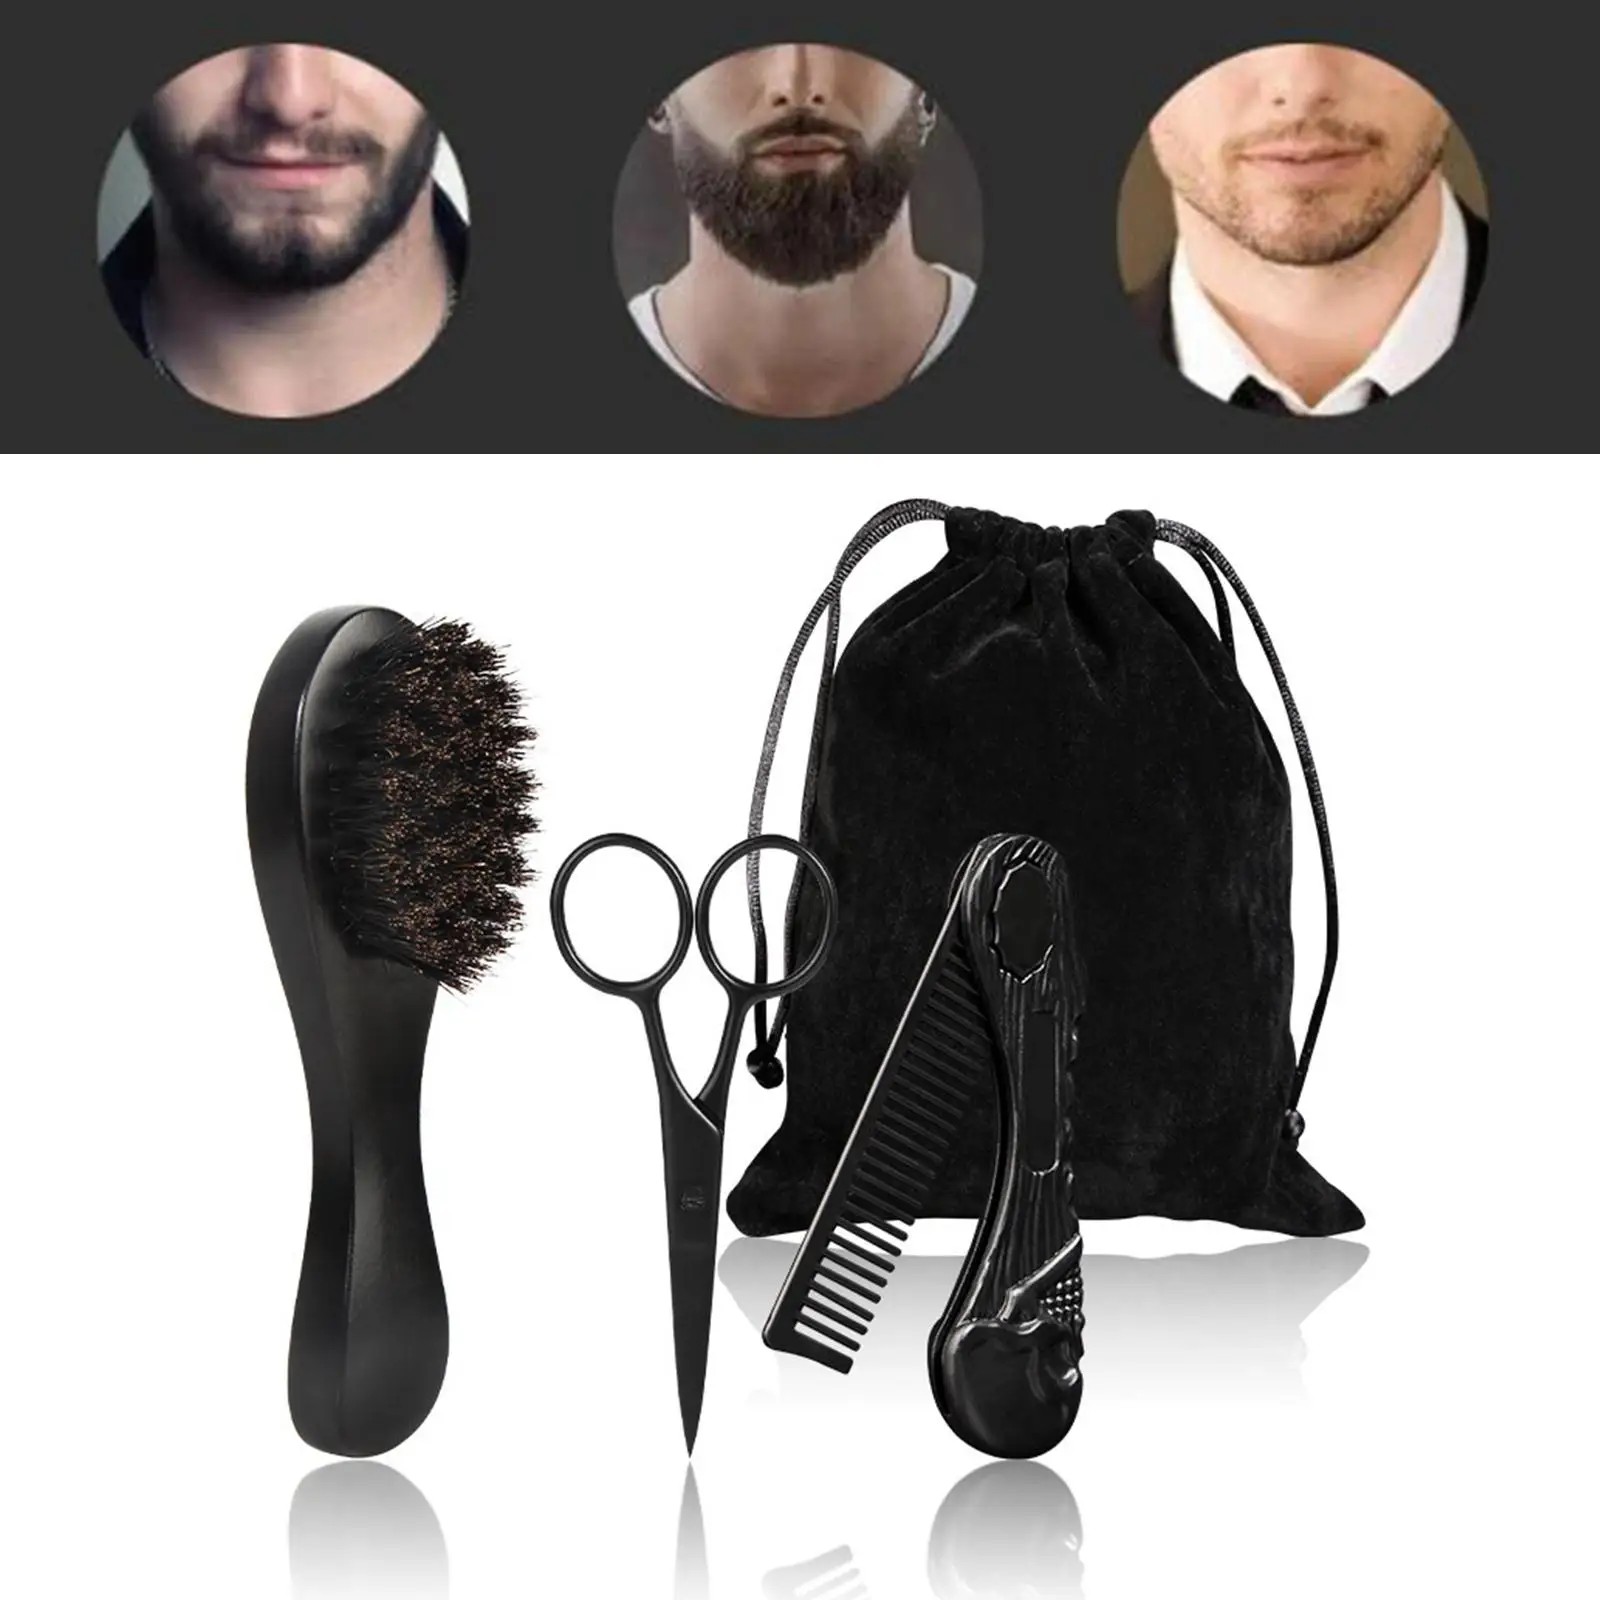 3x Beard  Folding Comb with Dustproof Bag for Beard Grooming